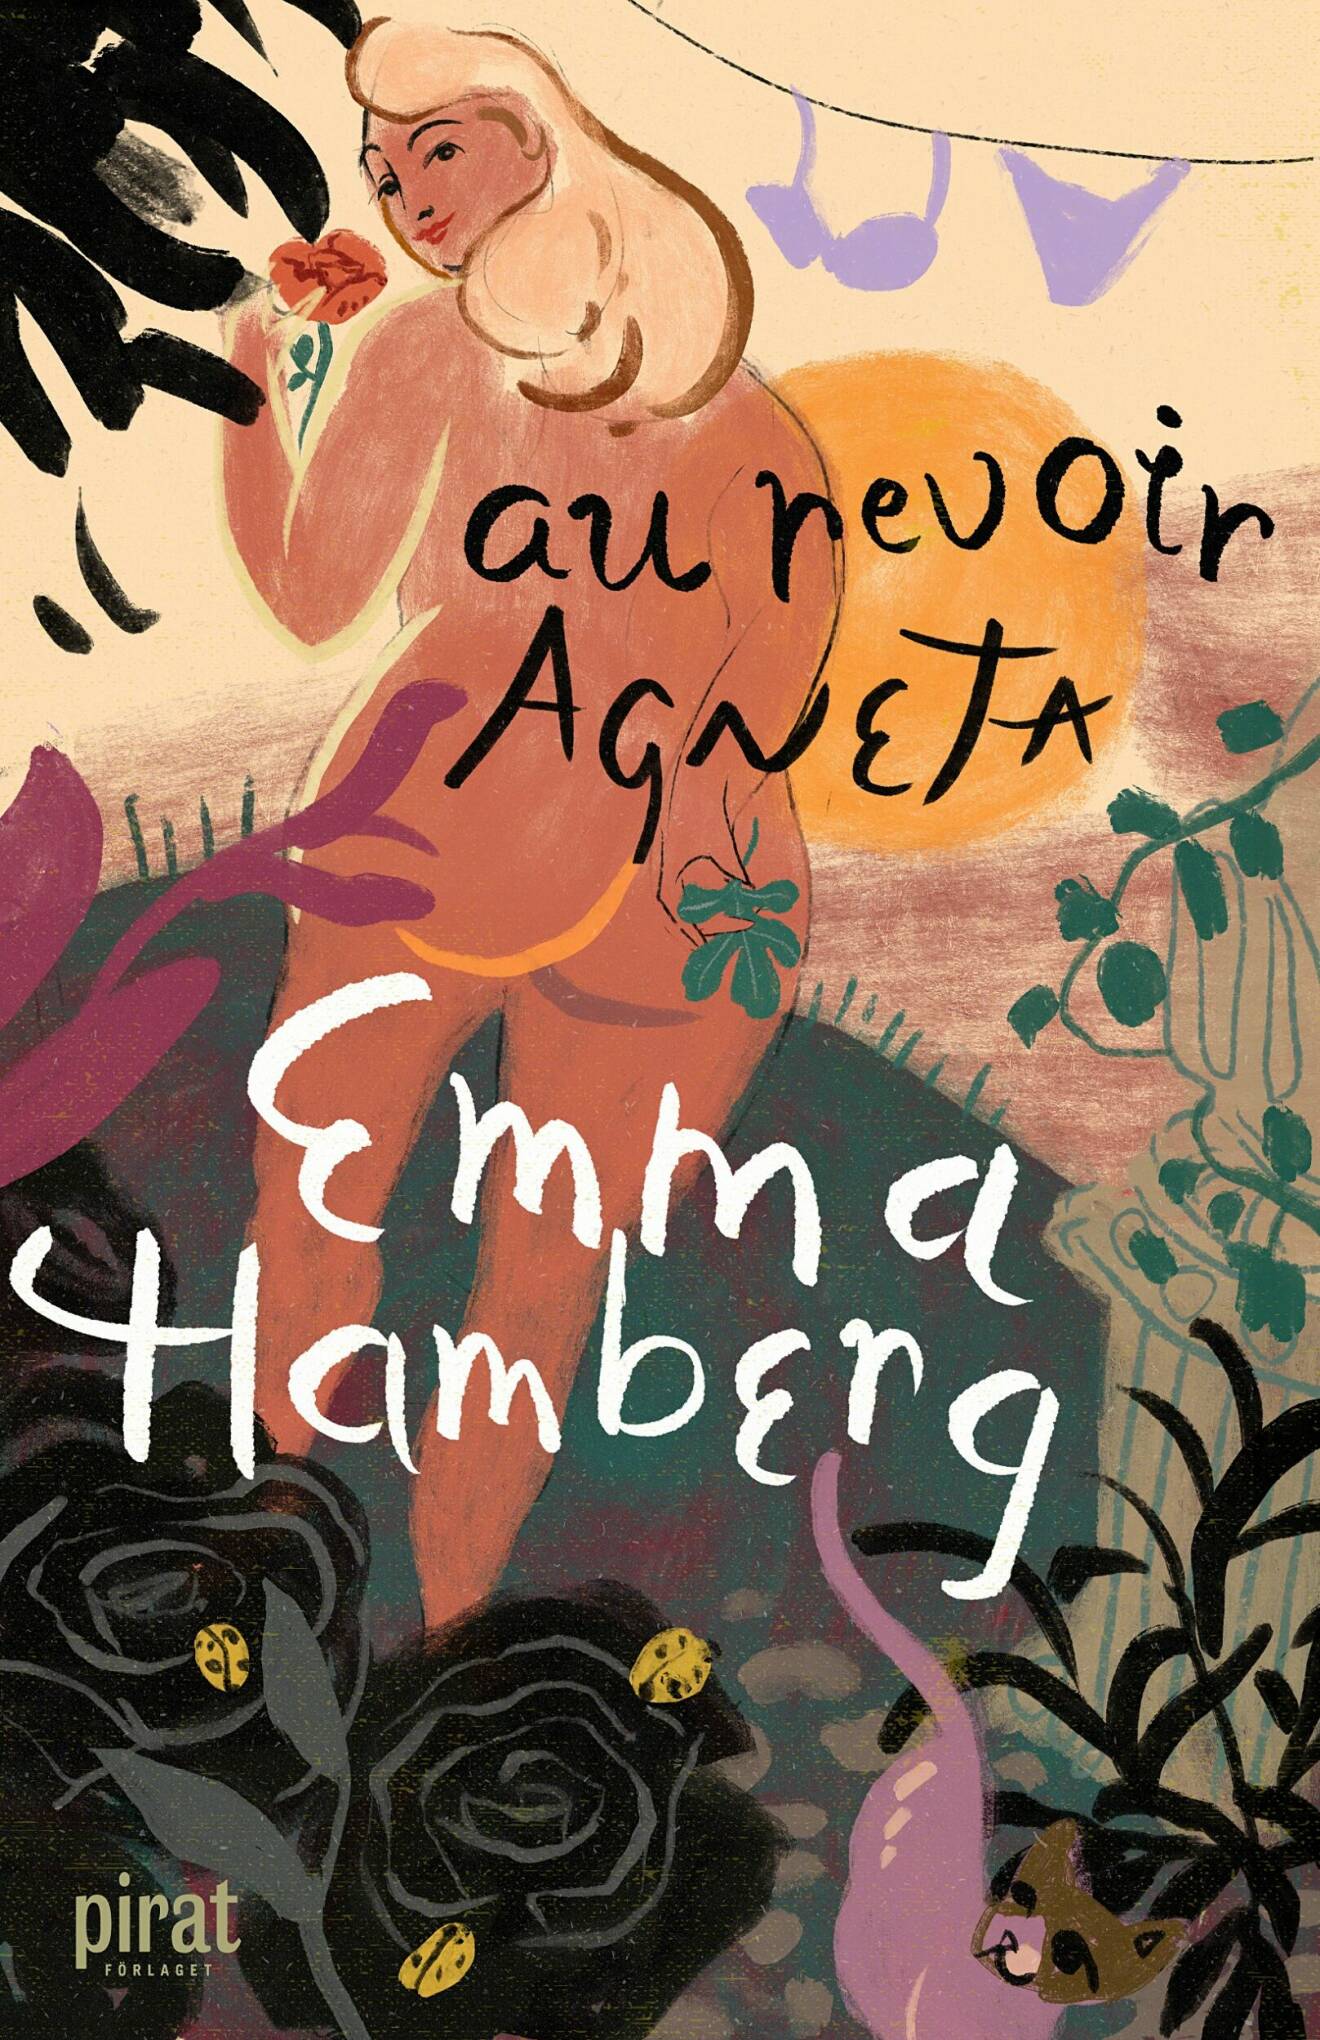 Au revoir Agneta
Emma Hamberg.